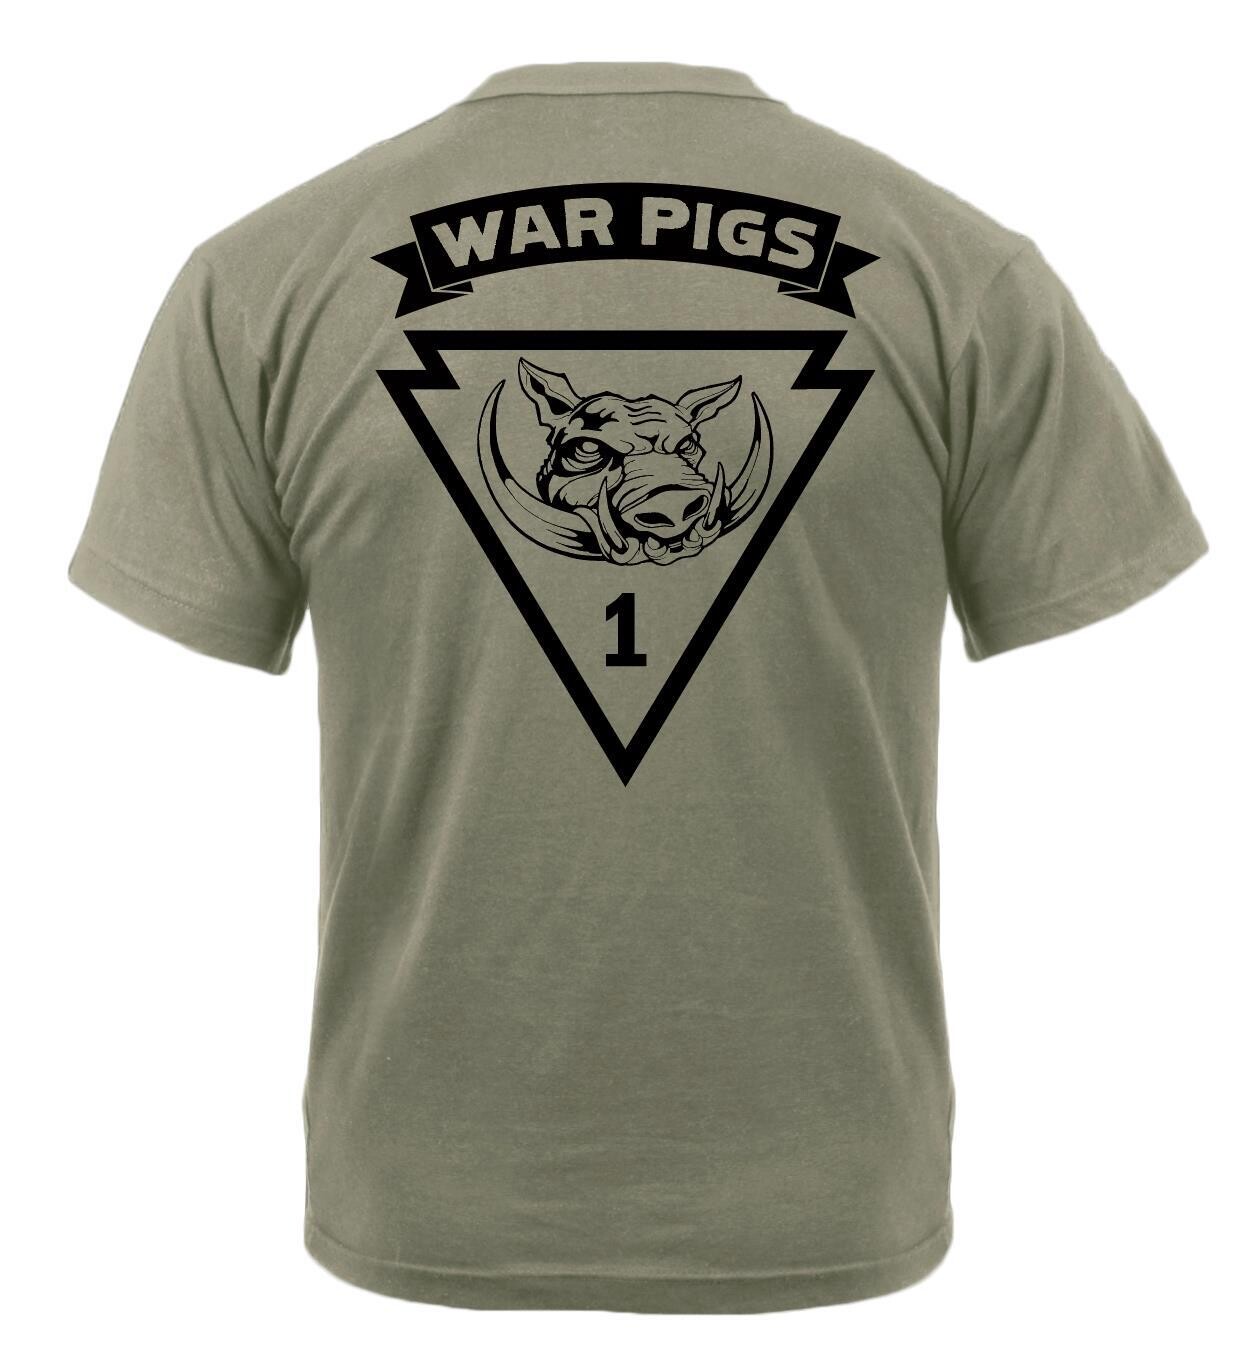 1st Platoon "War Pigs" B TRP 1-32 CAV Coyote T-Shirt